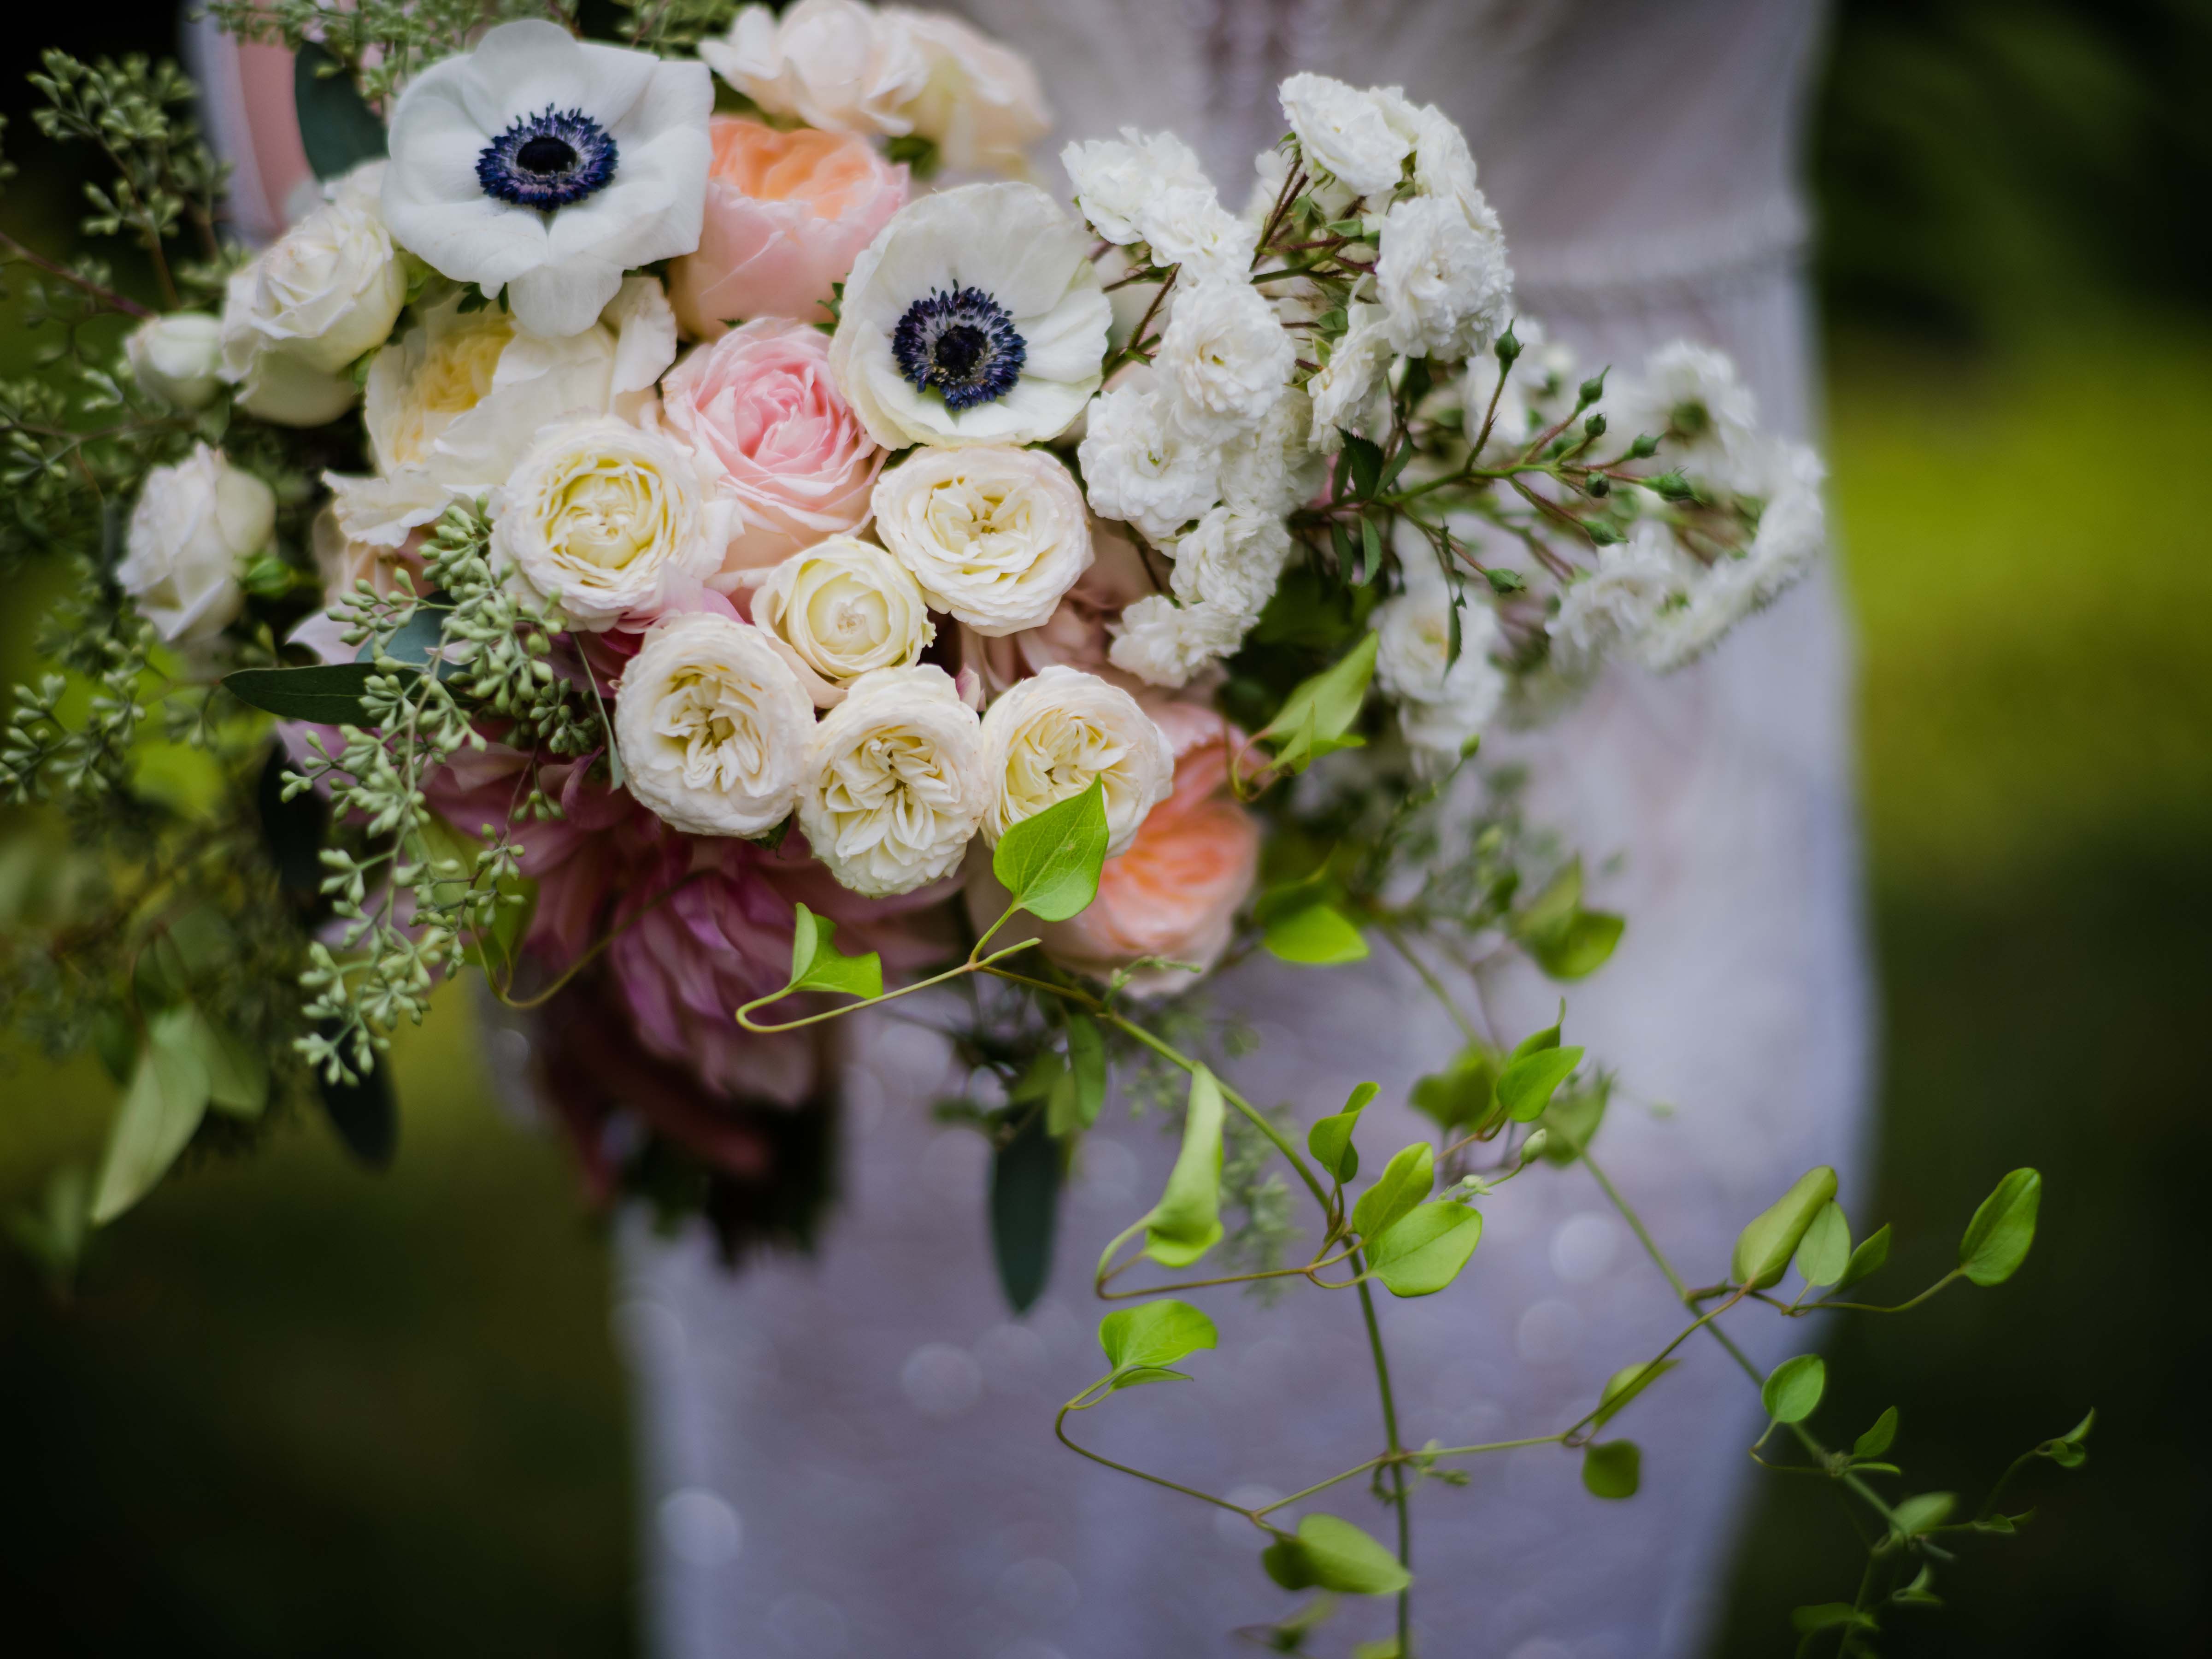 Pretty bridal bouquet of garden roses, garden spray roses, and anemones, designed by Flora Nova Design Seattle